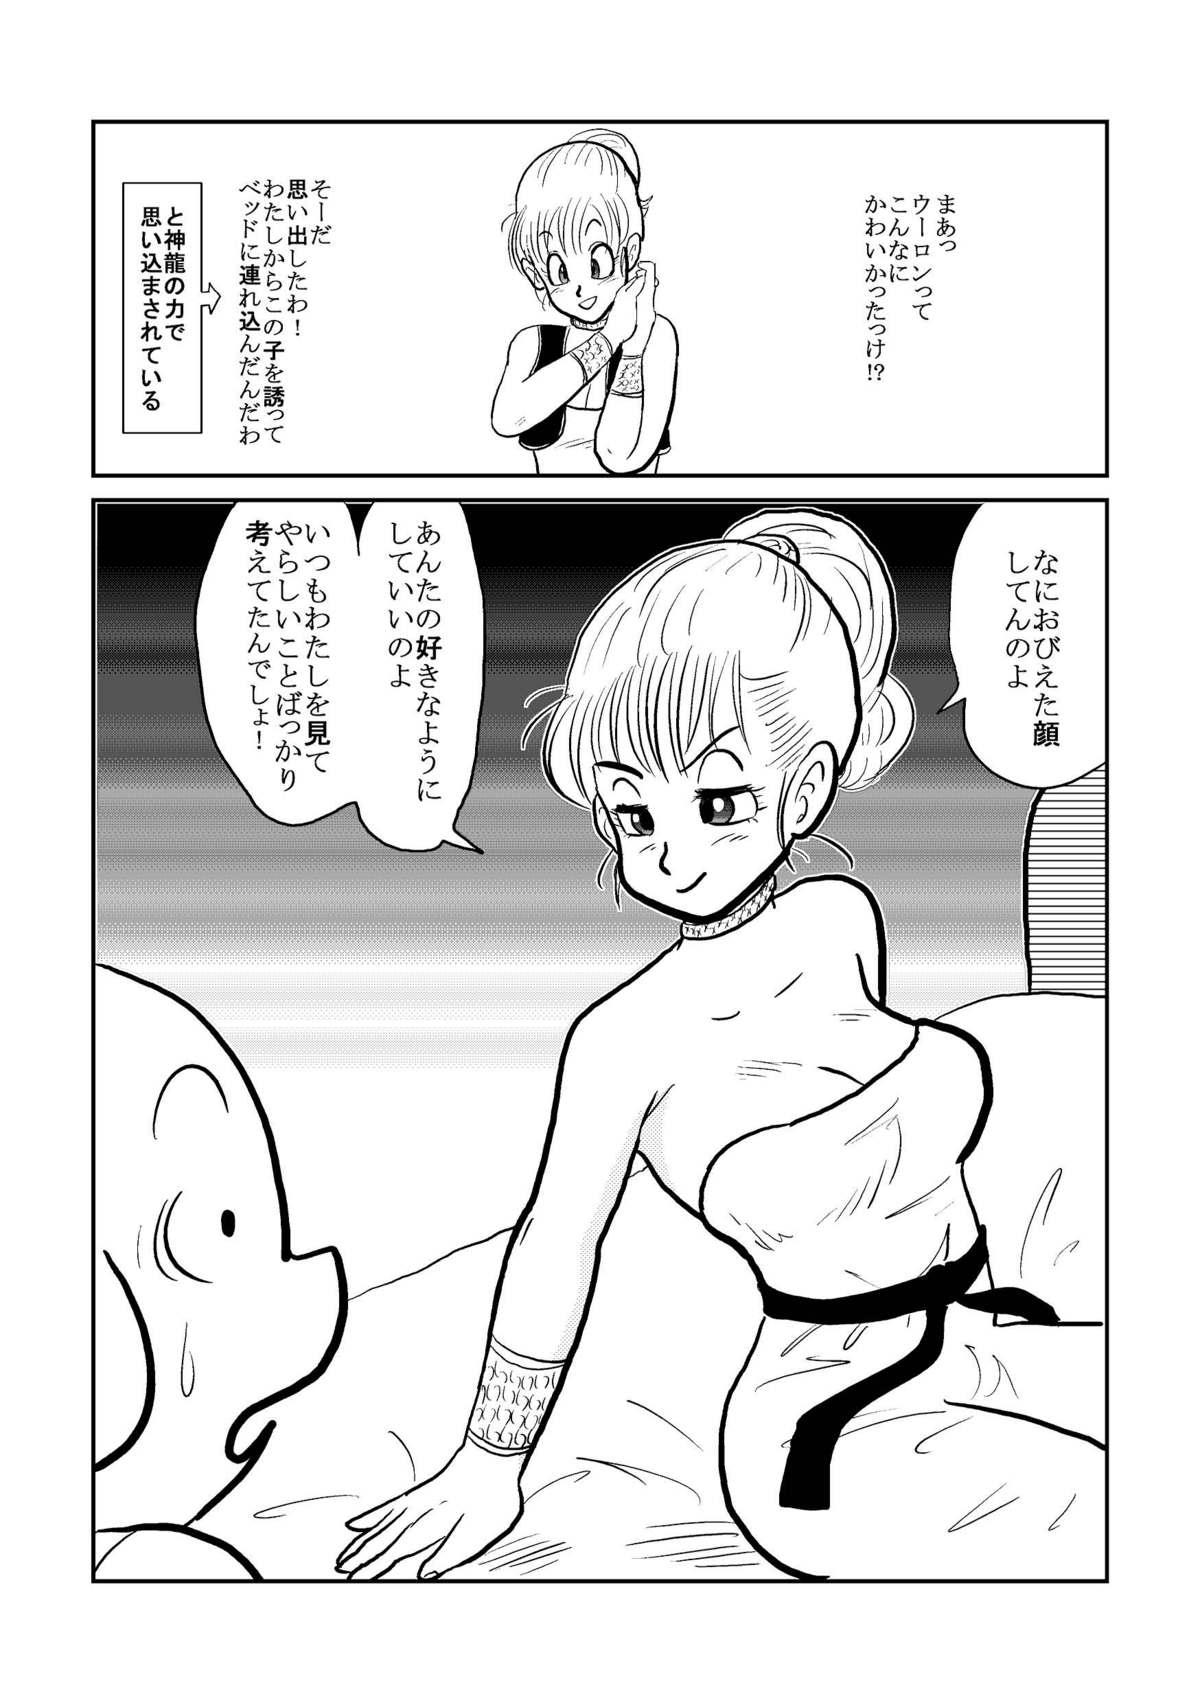 Cheat DB Gaiden - Oolong no Negai no Maki - Dragon ball Linda - Page 9